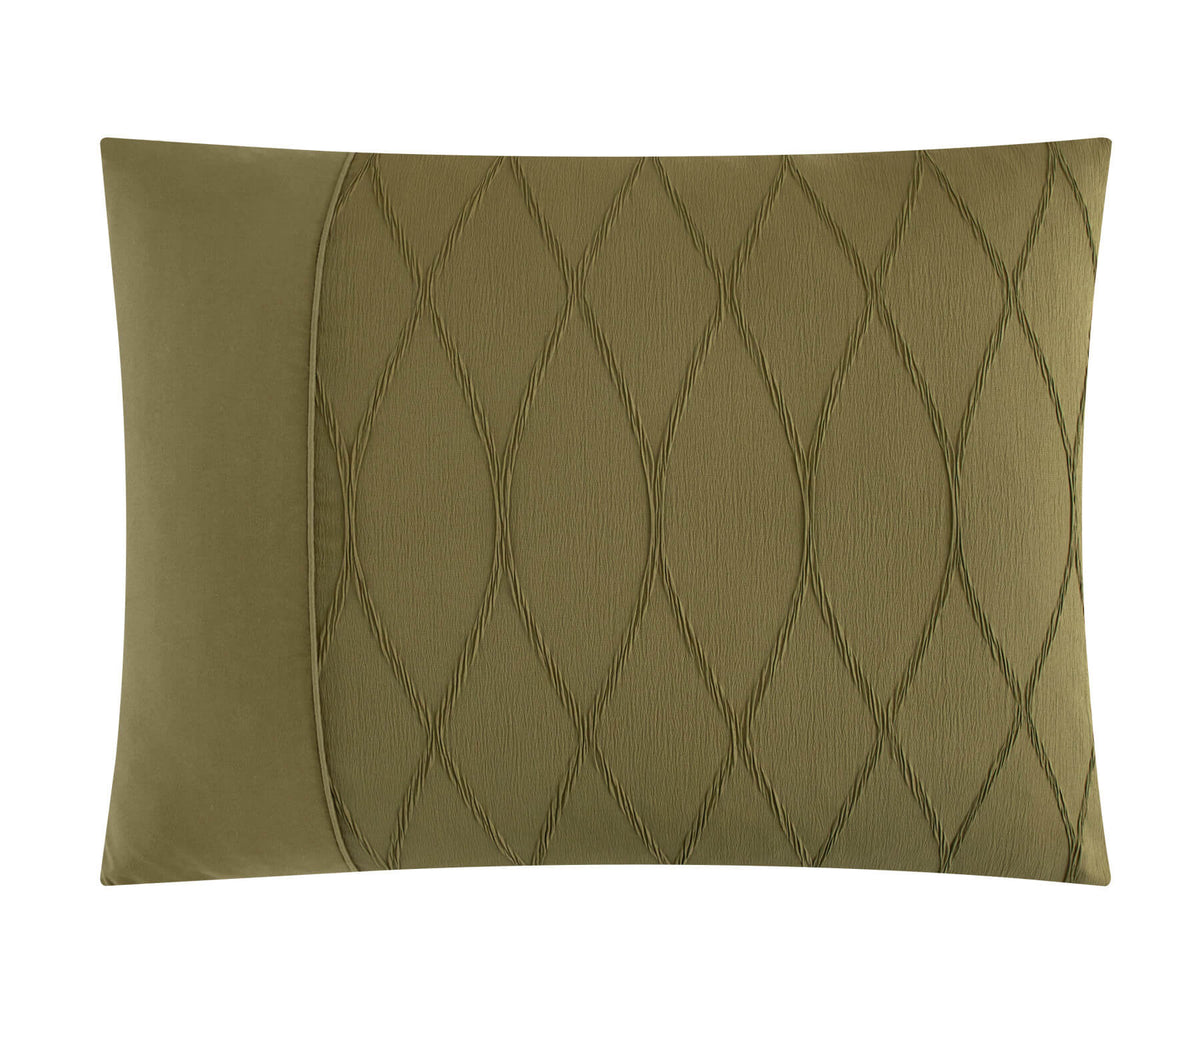 Chic Home Ophelia 9 Piece Textured Jacquard Comforter Set - Green